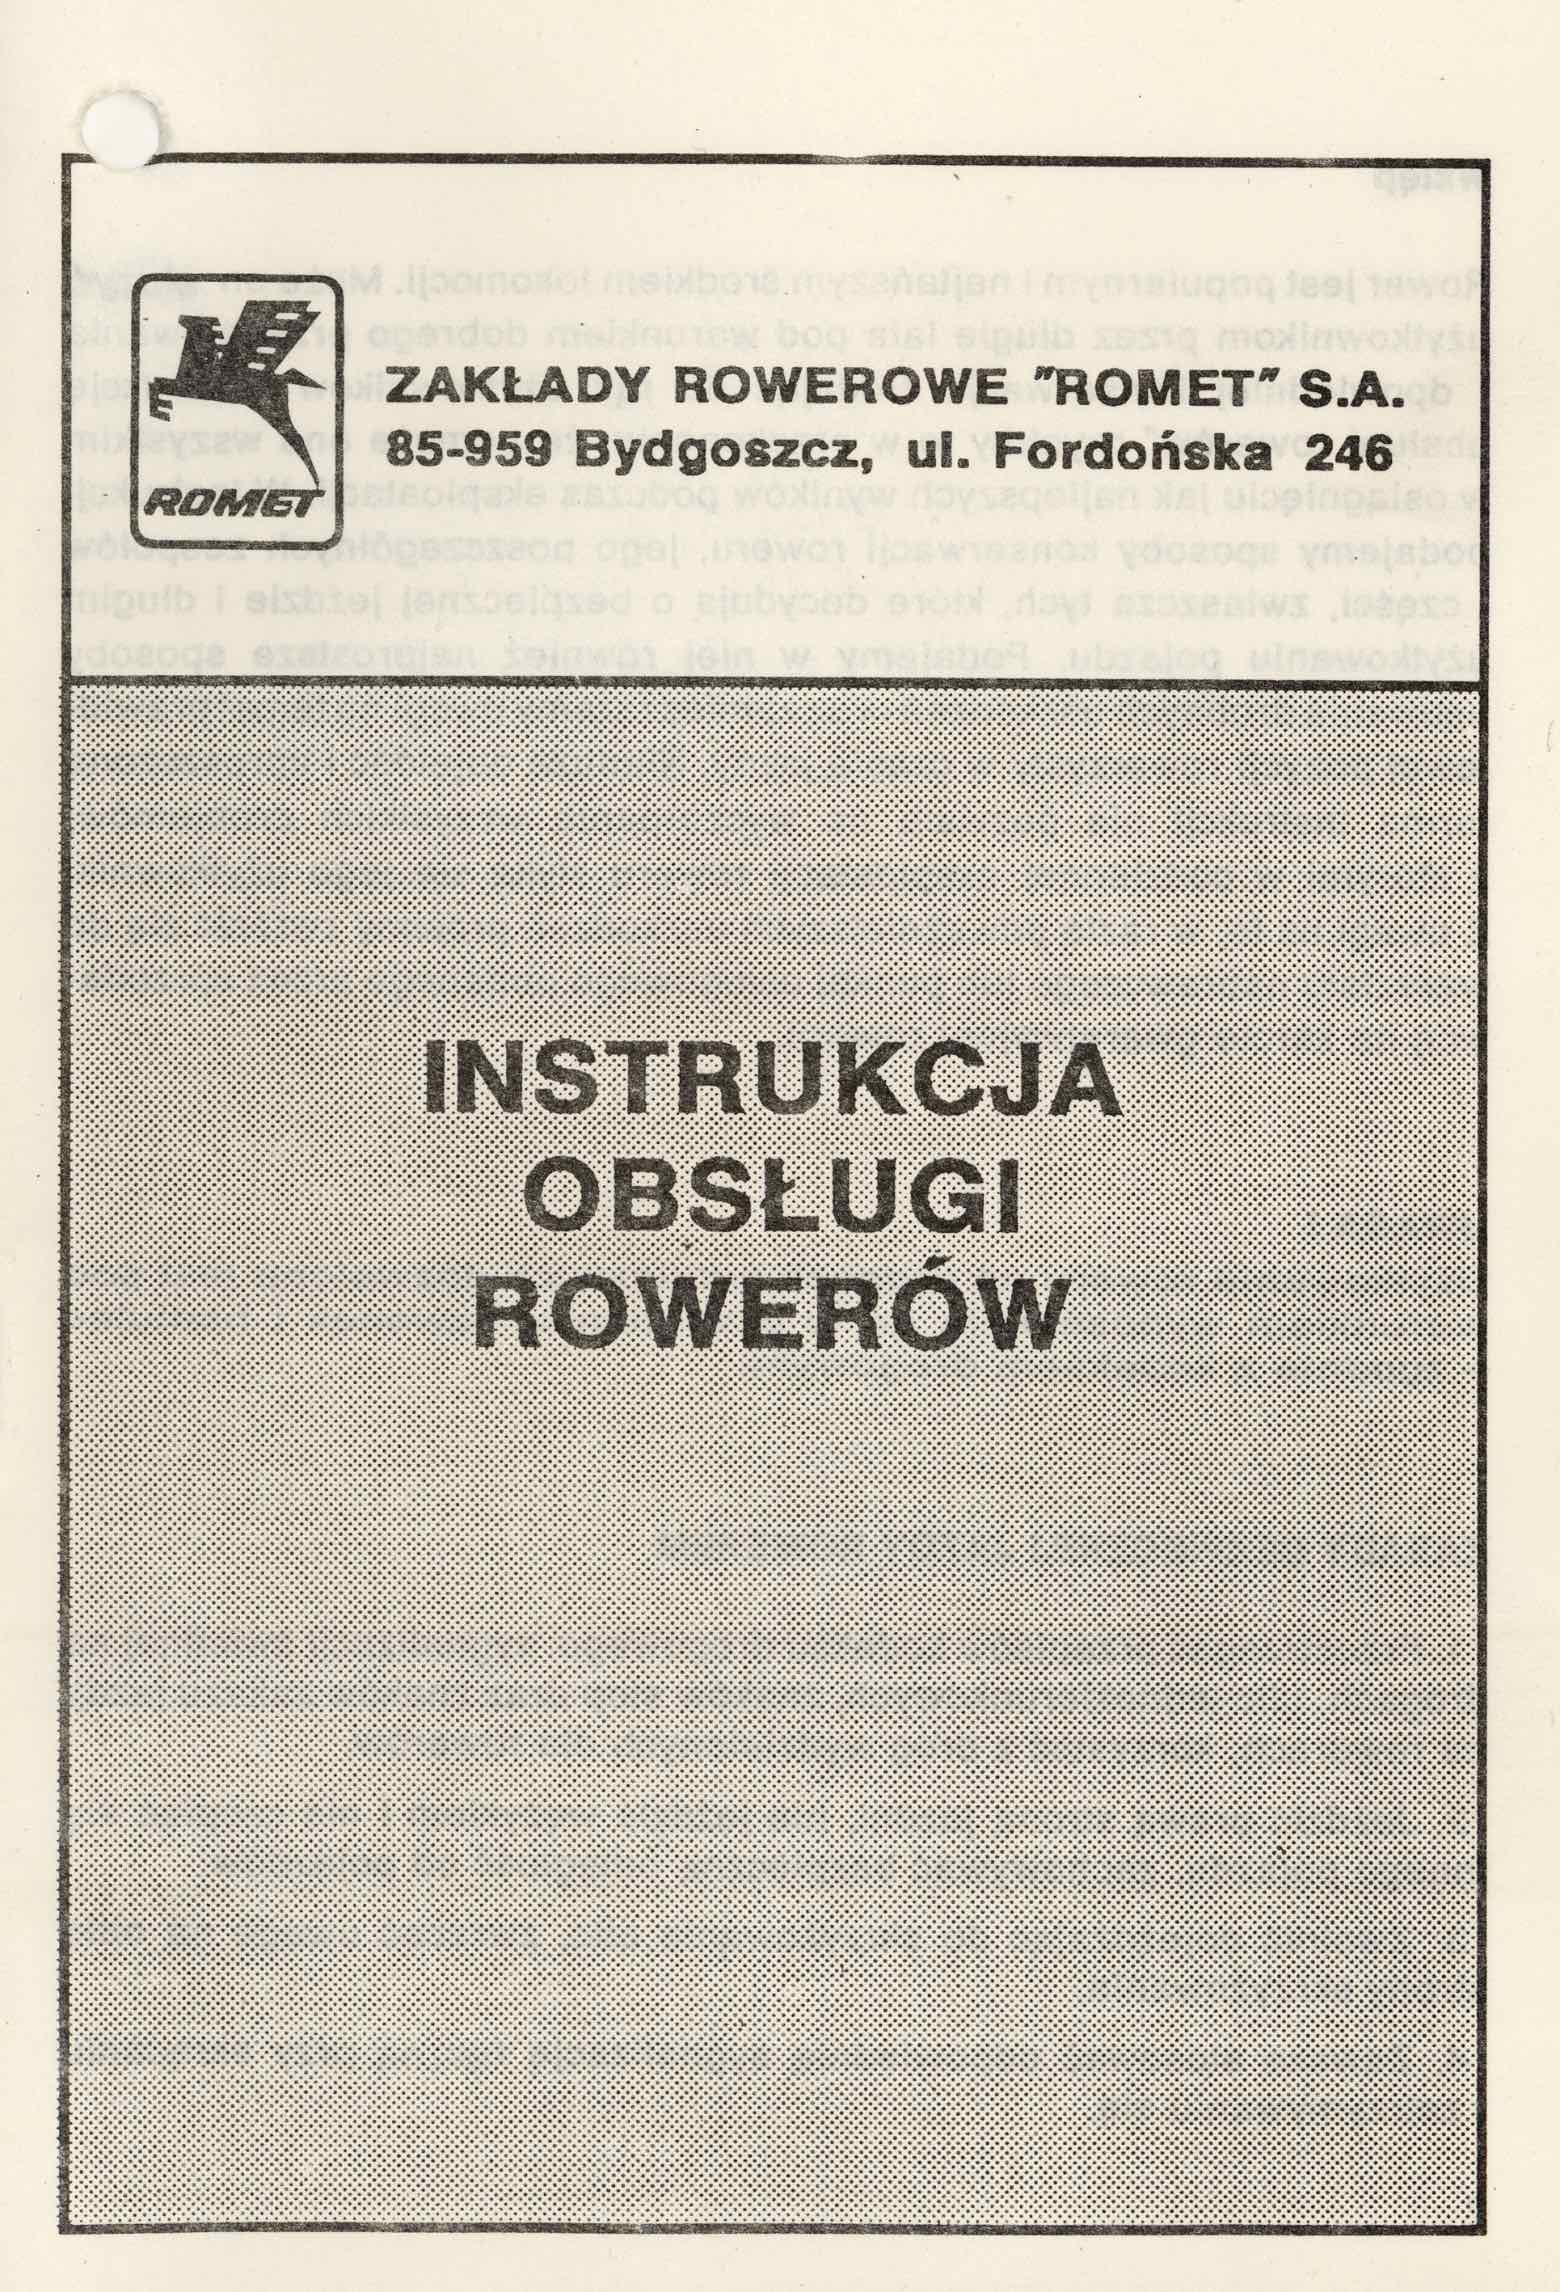 Romet - Instrukcja Obslugi Rowerow 1989? page 1 main image